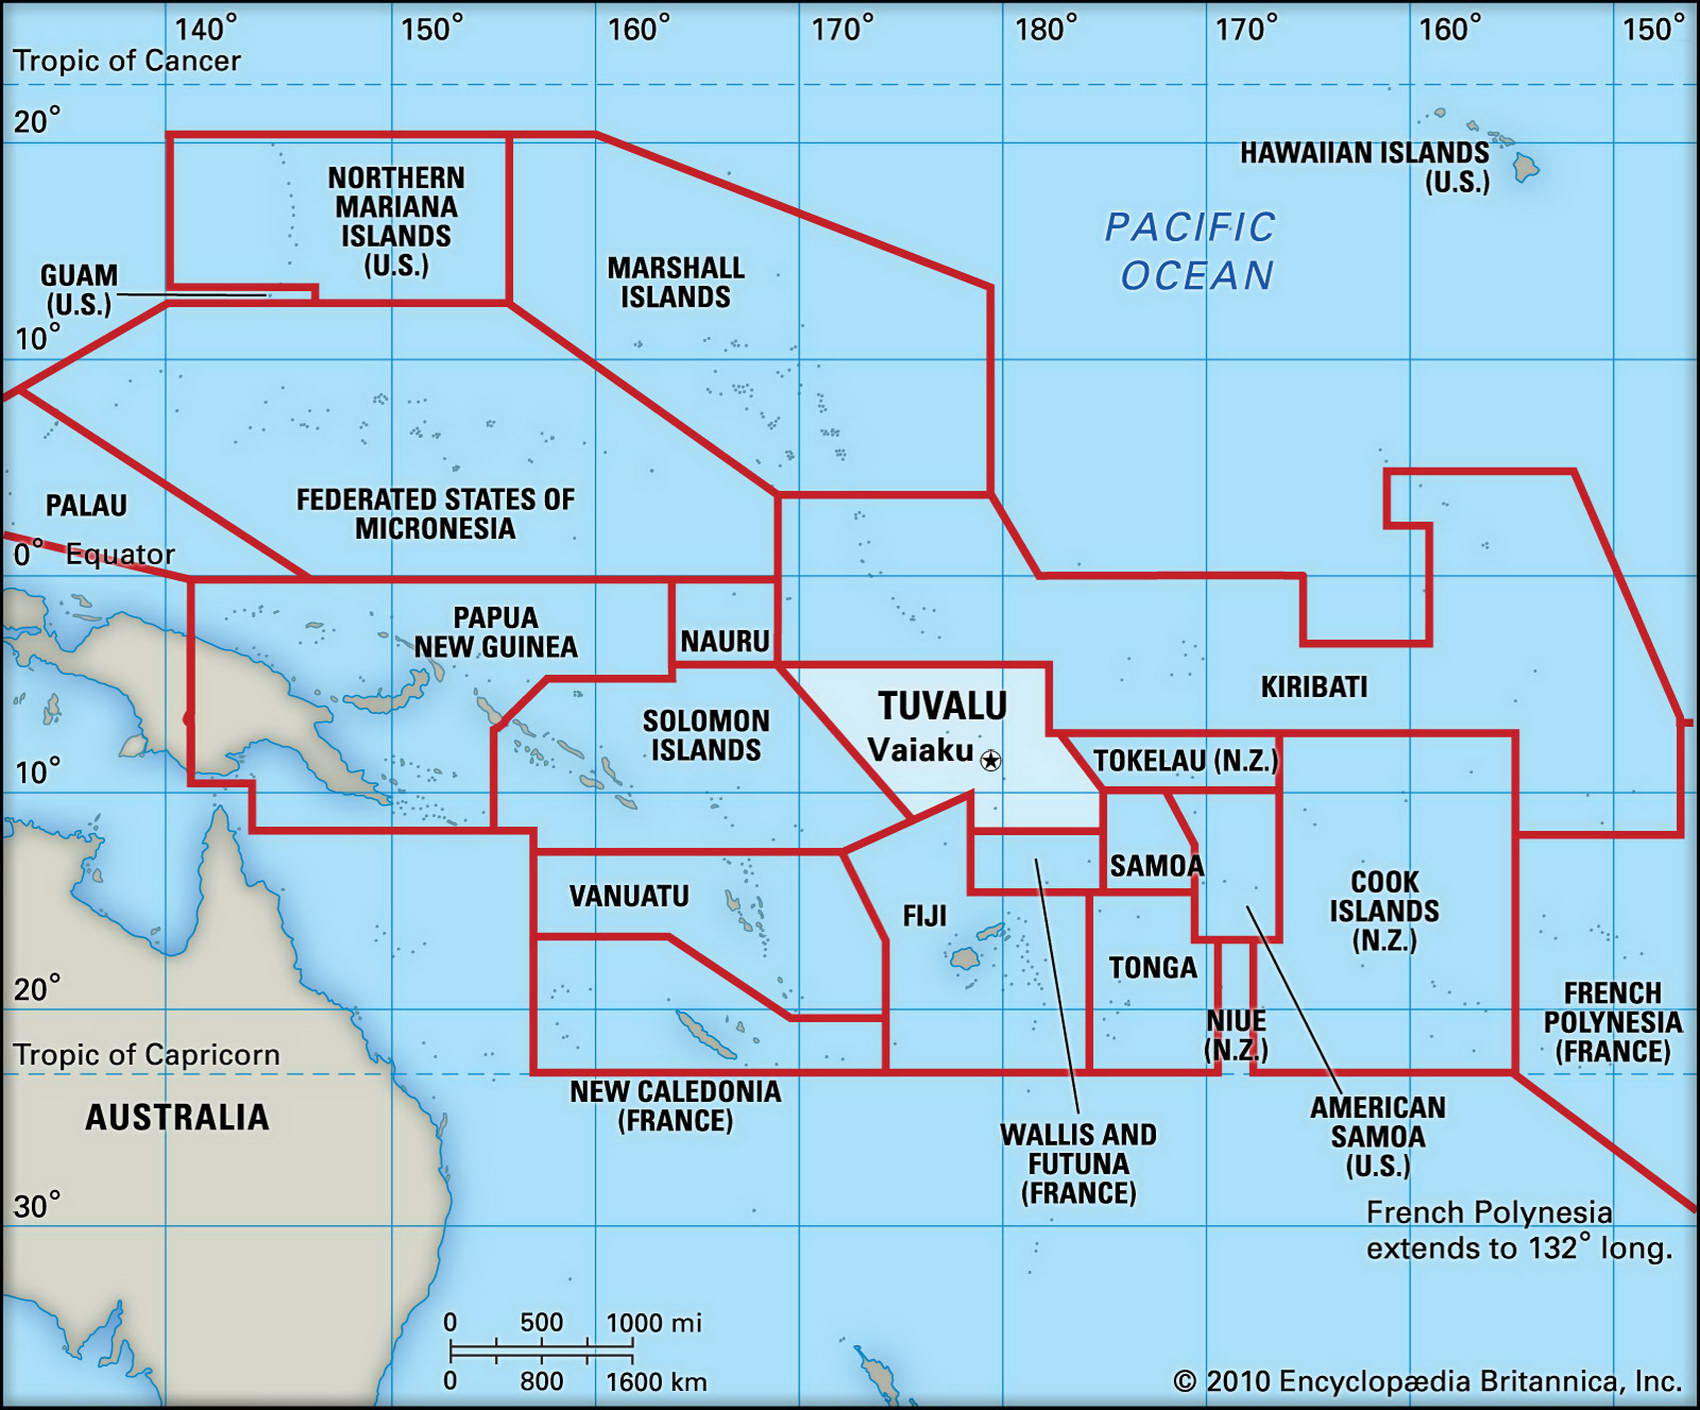 Тувалу на карте мира